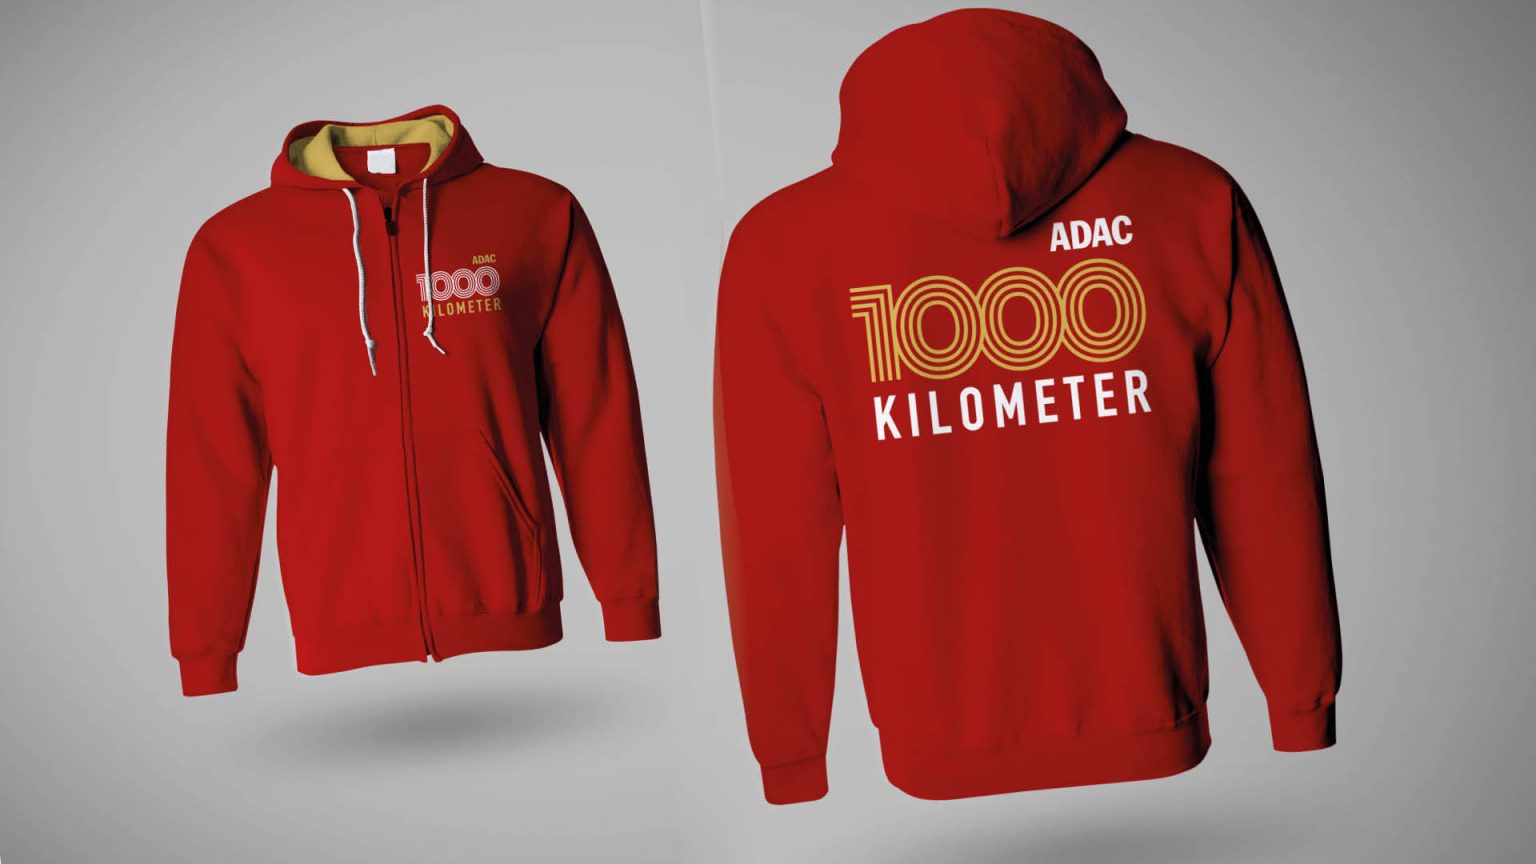 1000km Brand Design Full HD17